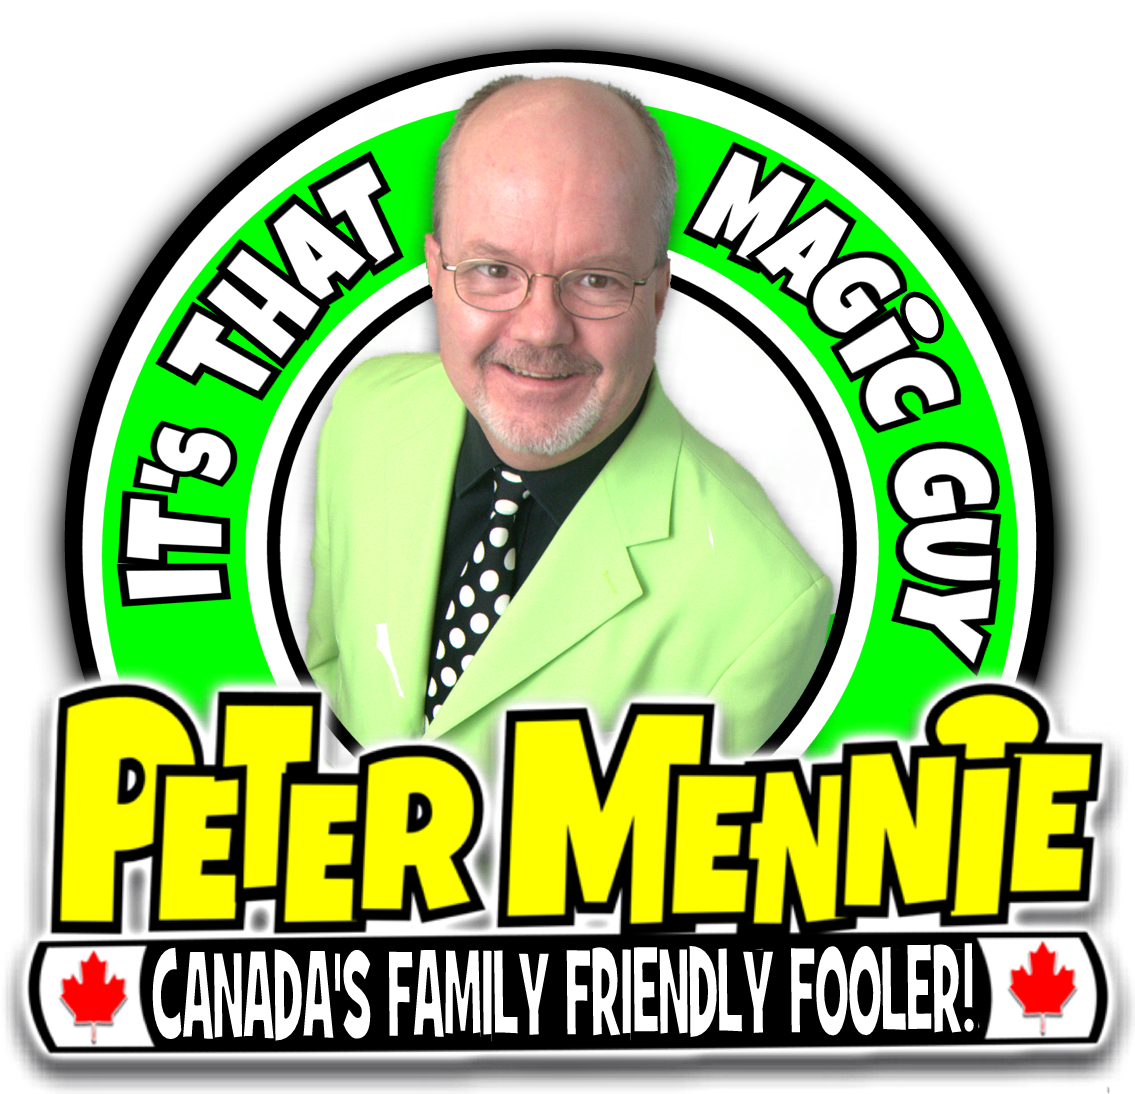 It's That Magic Guy Peter Mennie, Canada's Family Friendly Fooler